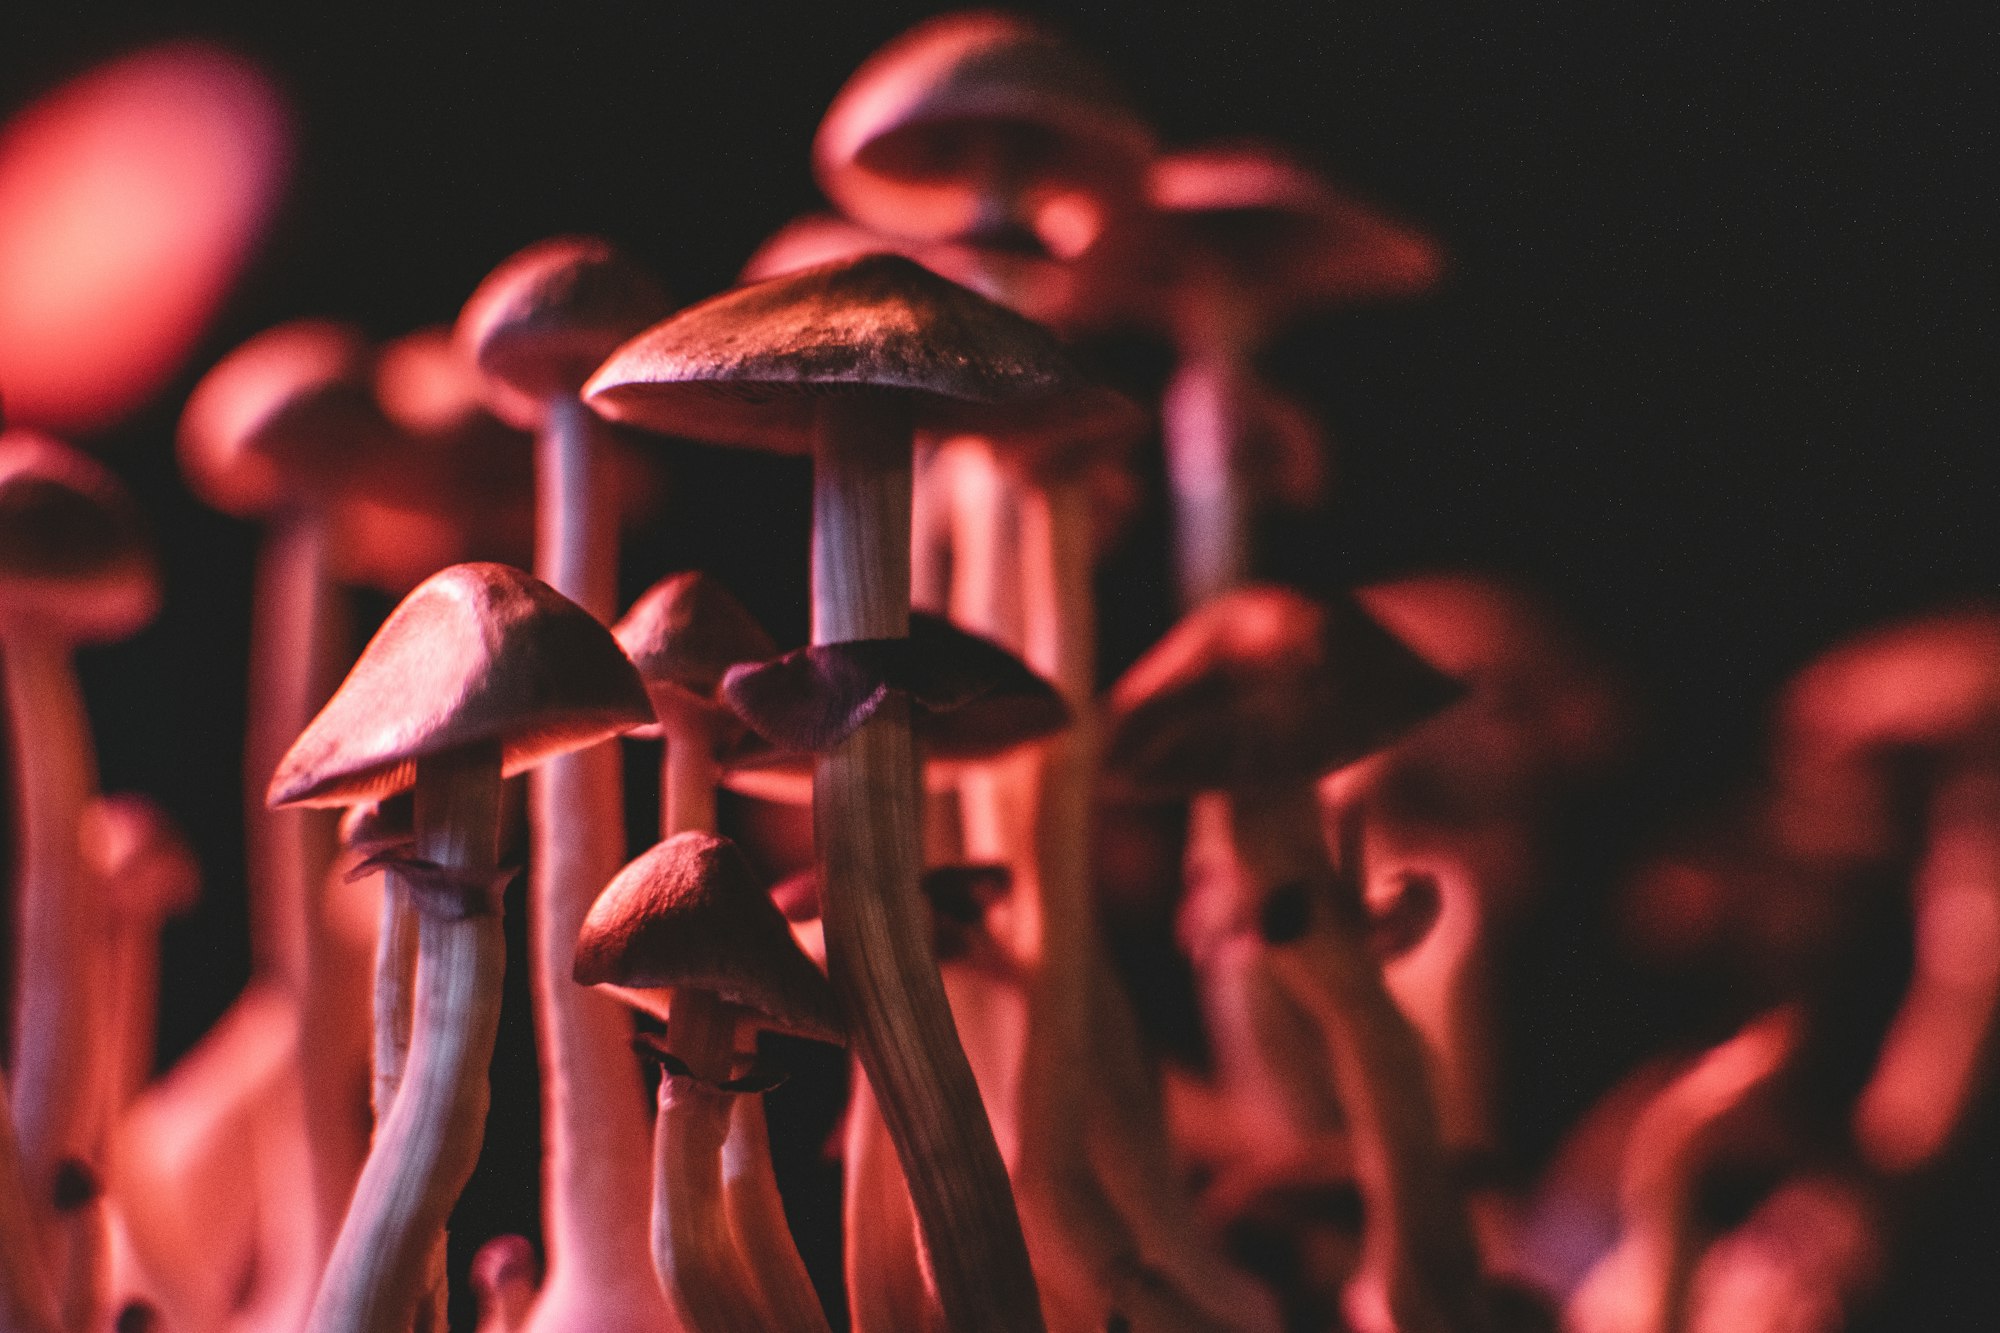 Closeup of some magical mushrooms grown indoor.